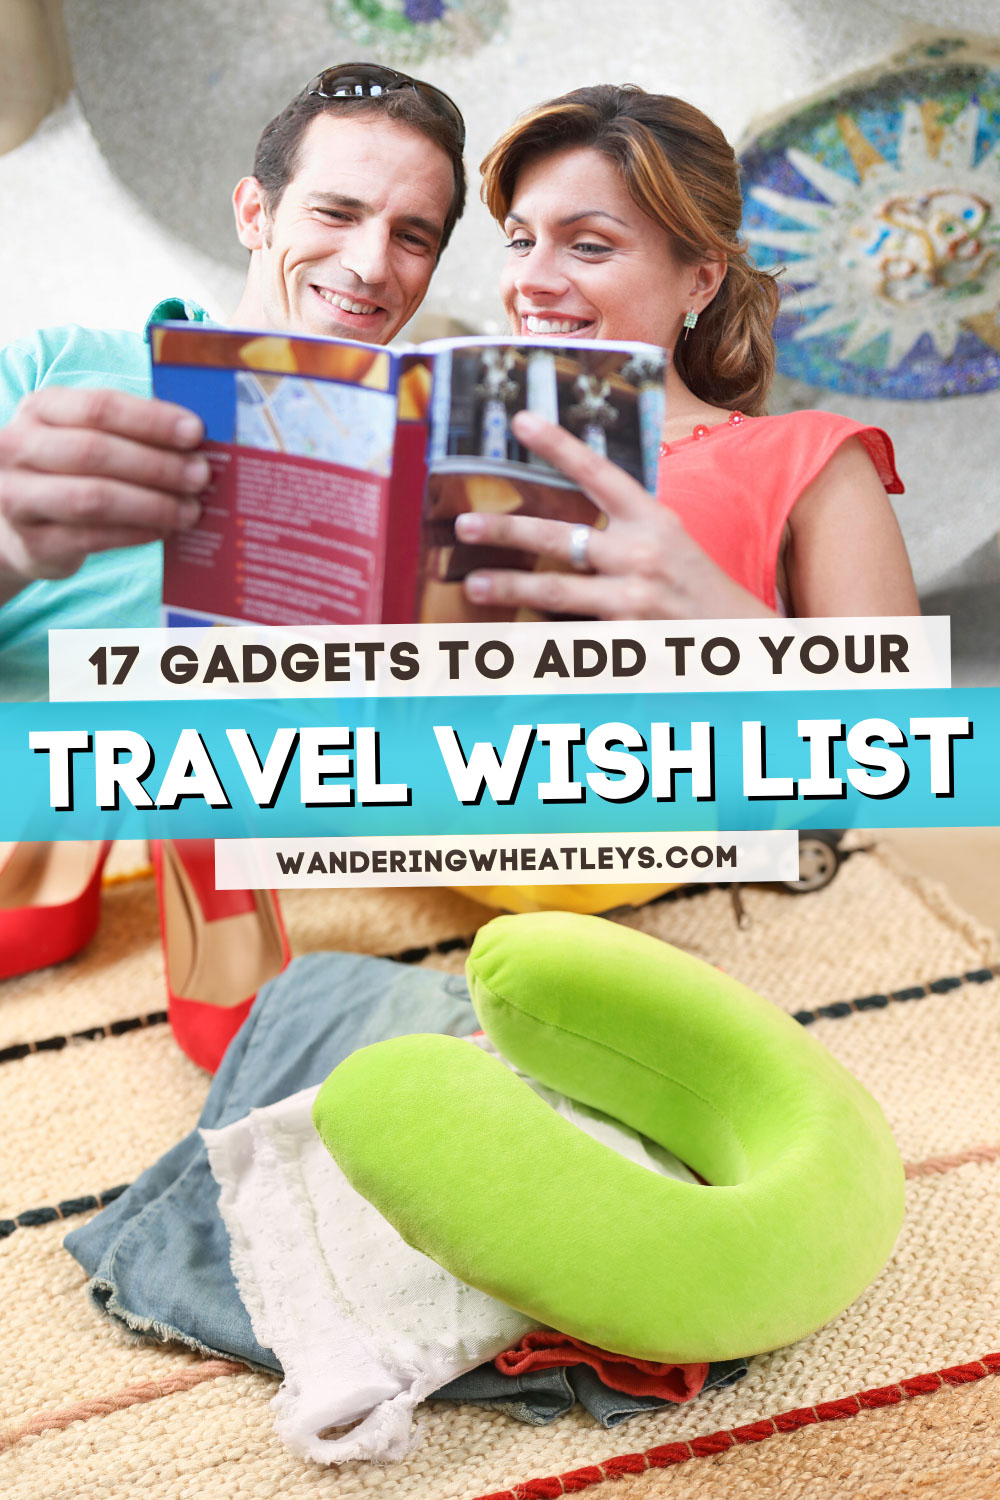 https://wanderingwheatleys.com/wp-content/uploads/2021/09/holiday-gift-guide-awesome-new-travel-gadgets-pinterest-3.jpg